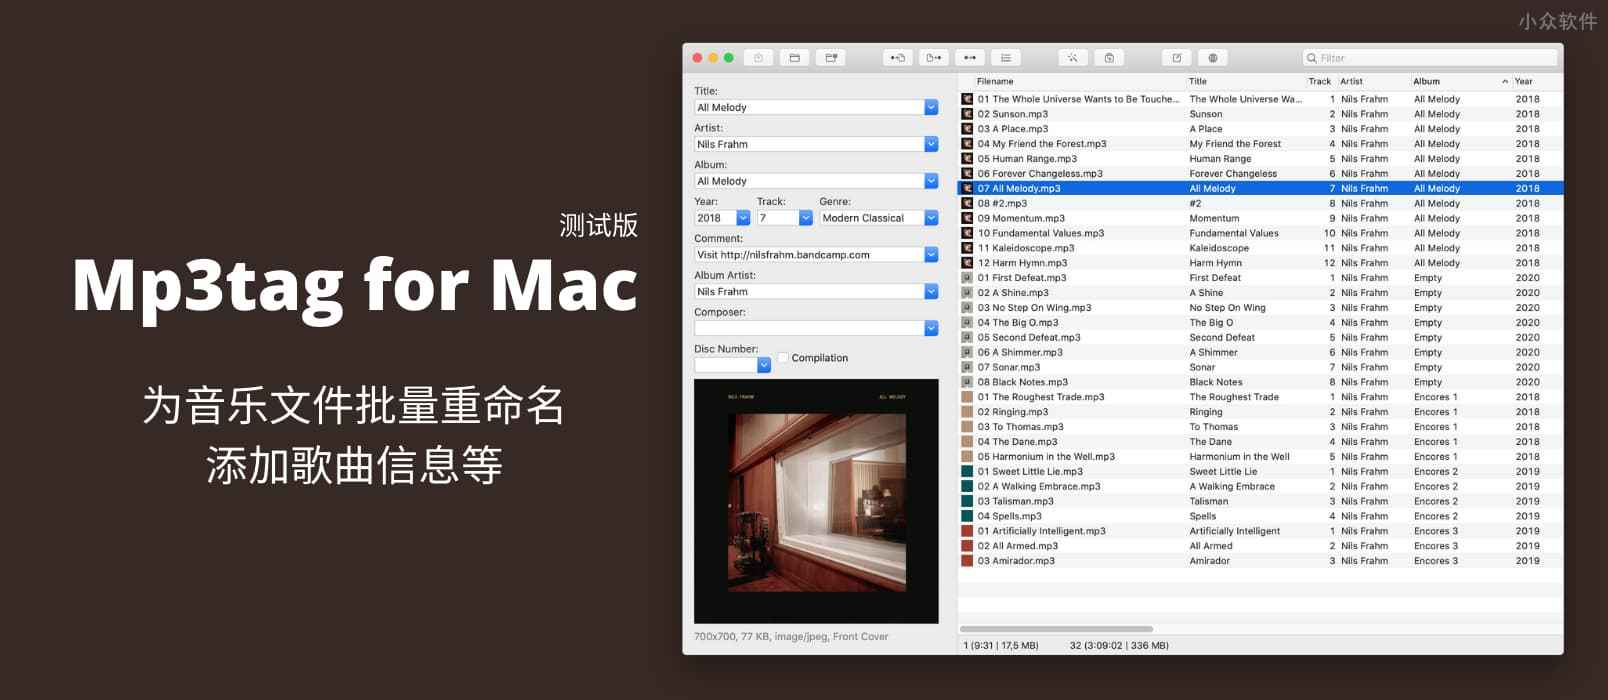 Mp3tag for Mac 测试版发布，为 MP3 等音乐文件批量重命名、添加歌曲信息等